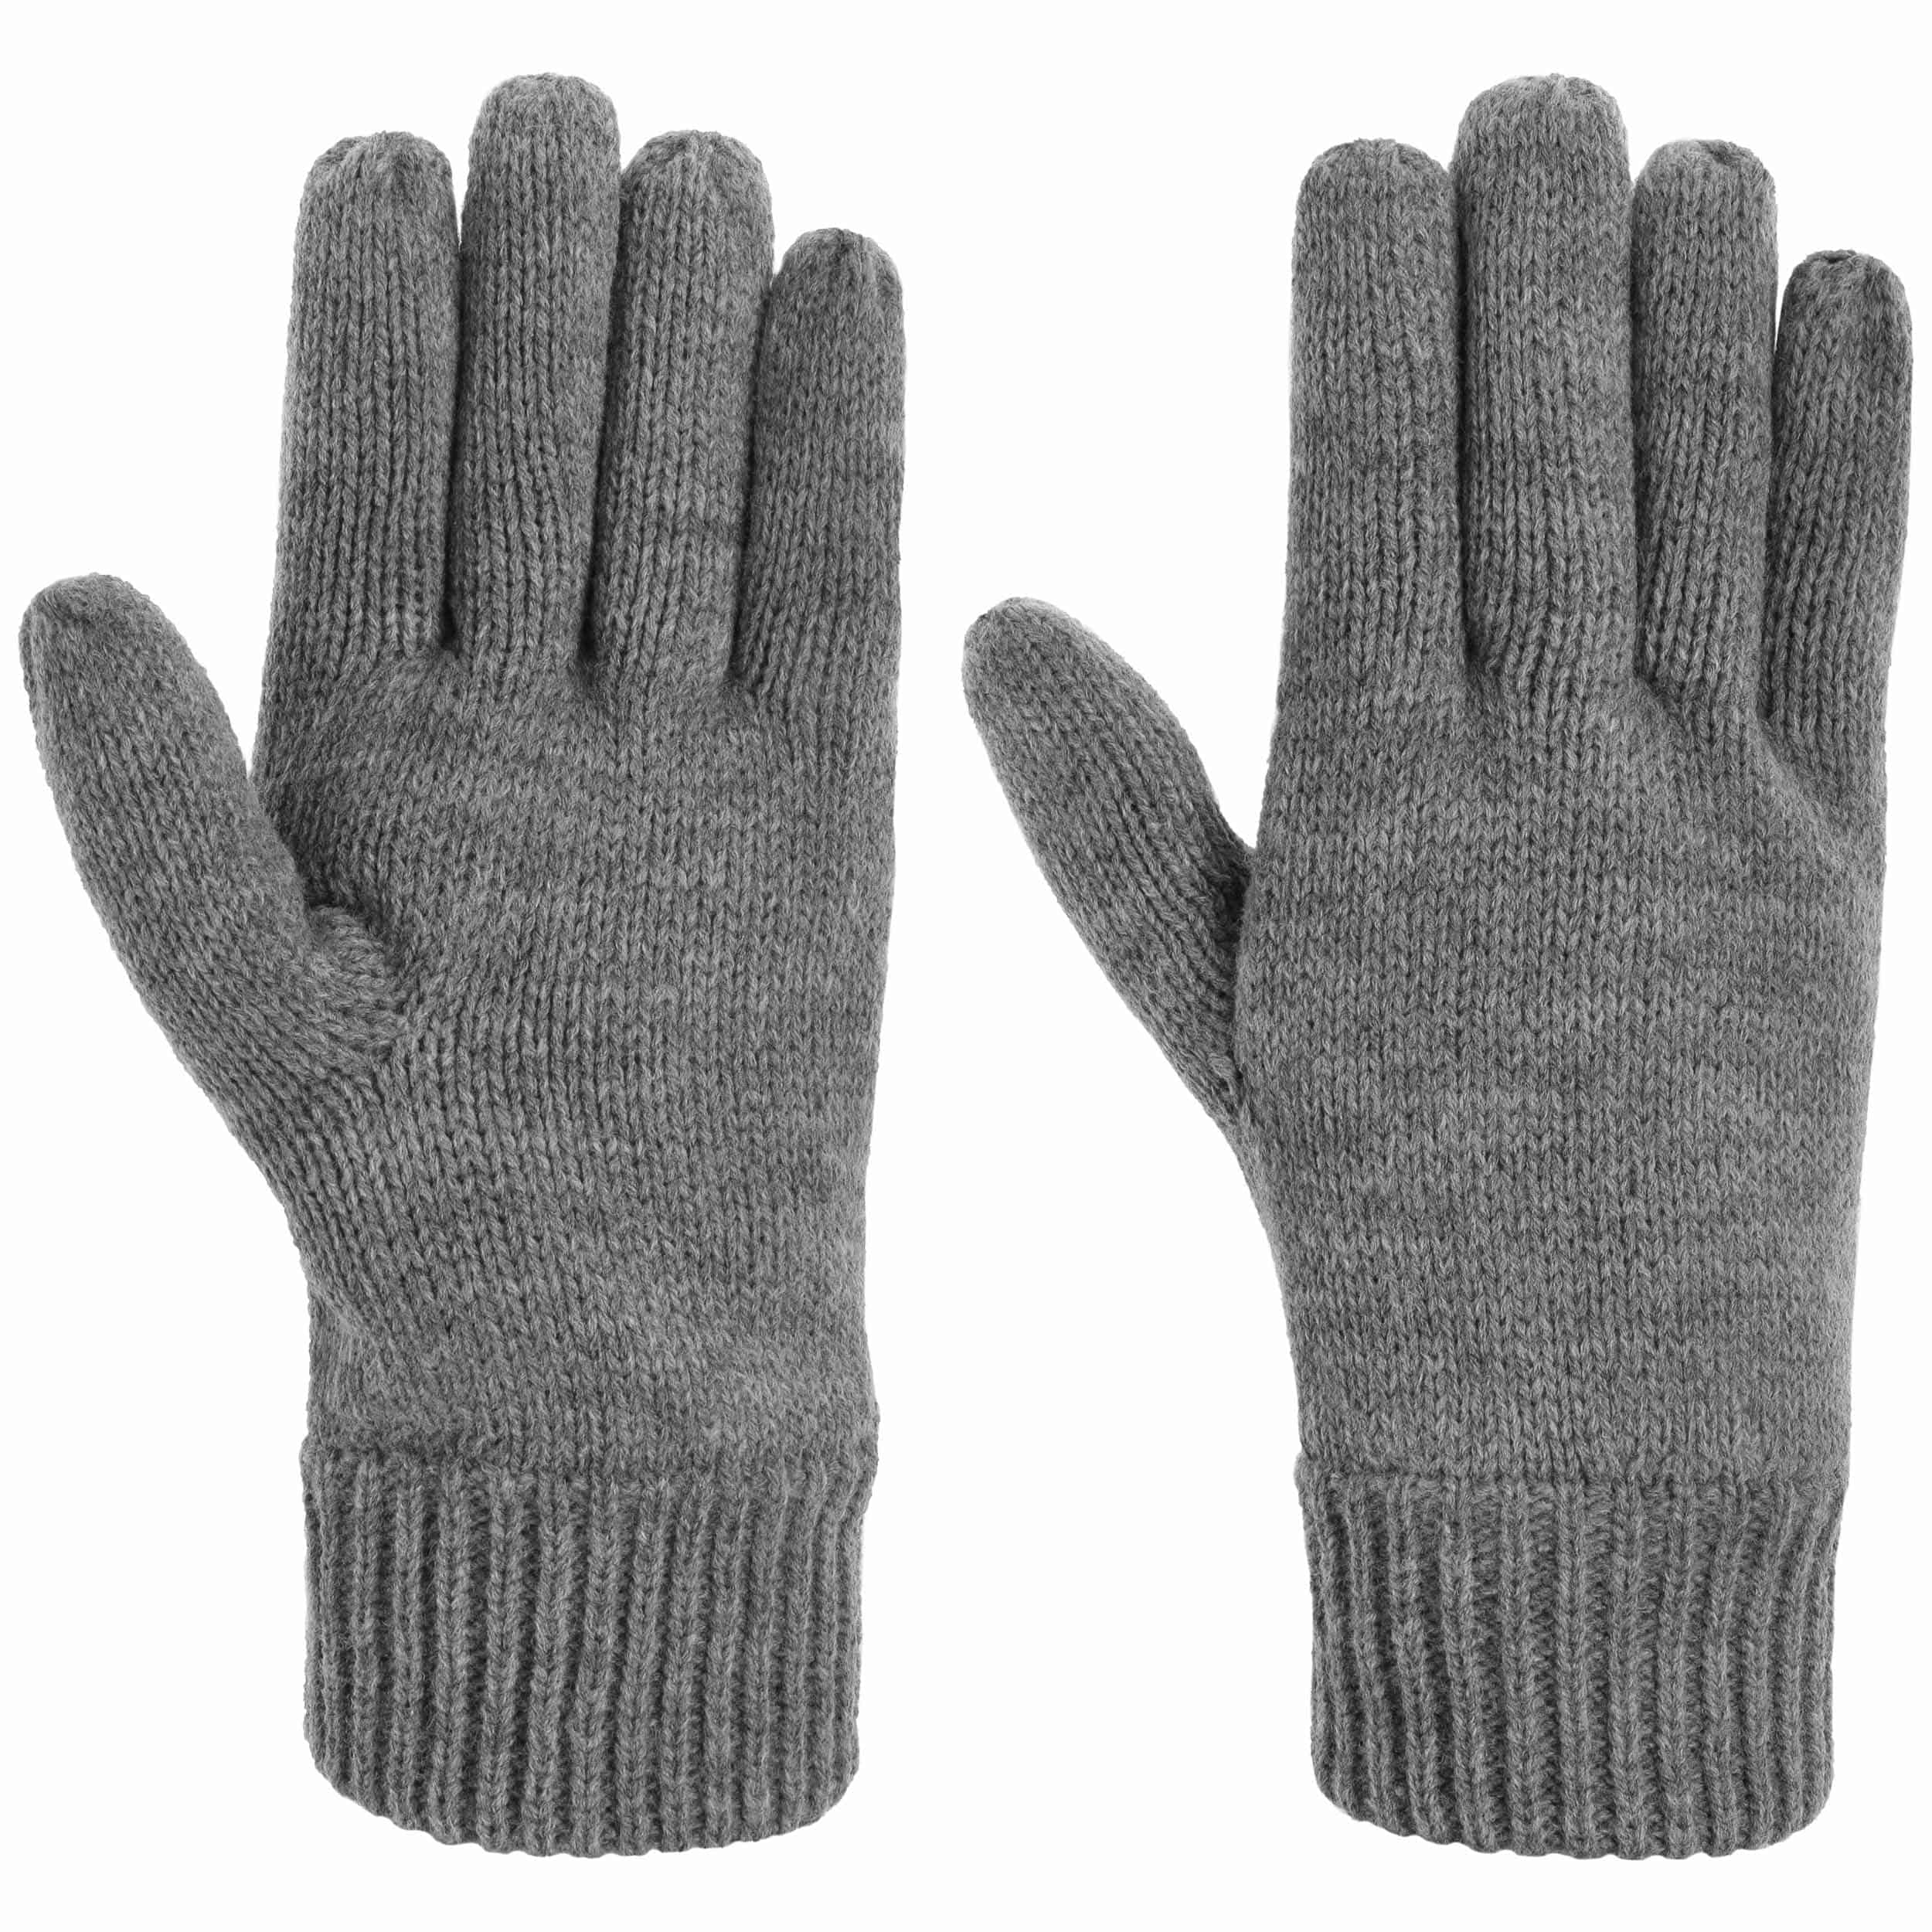 verwarring Sanders Strak Thinsulate 3M Handschoenen by Lipodo - 17,95 €